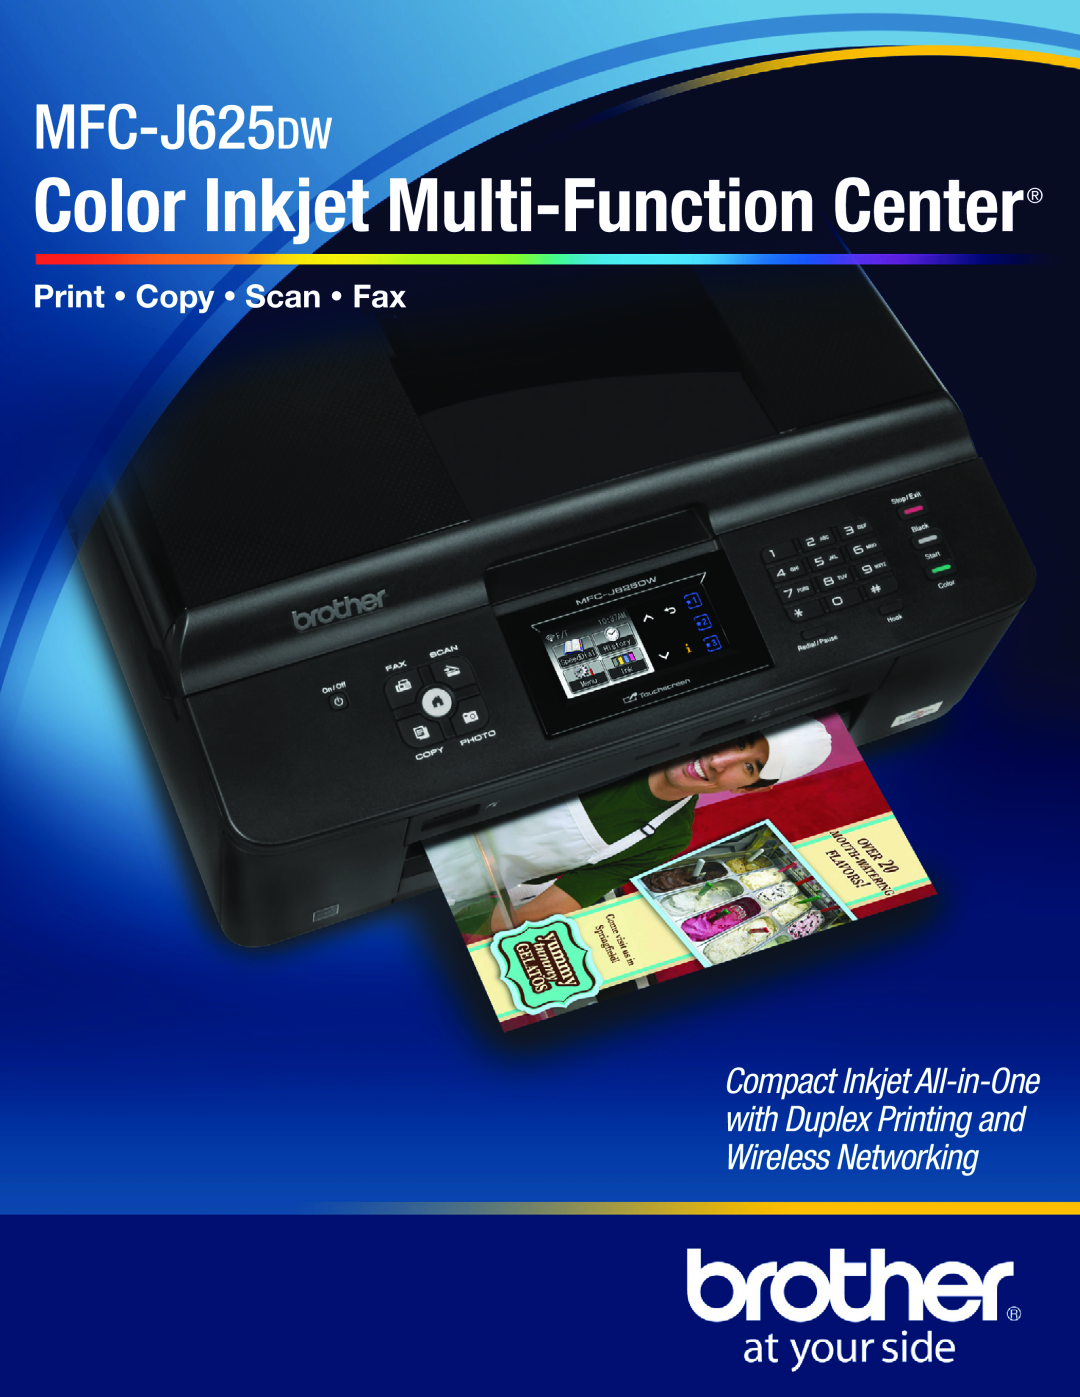 Brother MFC-J625W manual Color Inkjet Multi-Function Center, MFC-J625dw, BRO4982-MFCj625dwCatPg-082211 